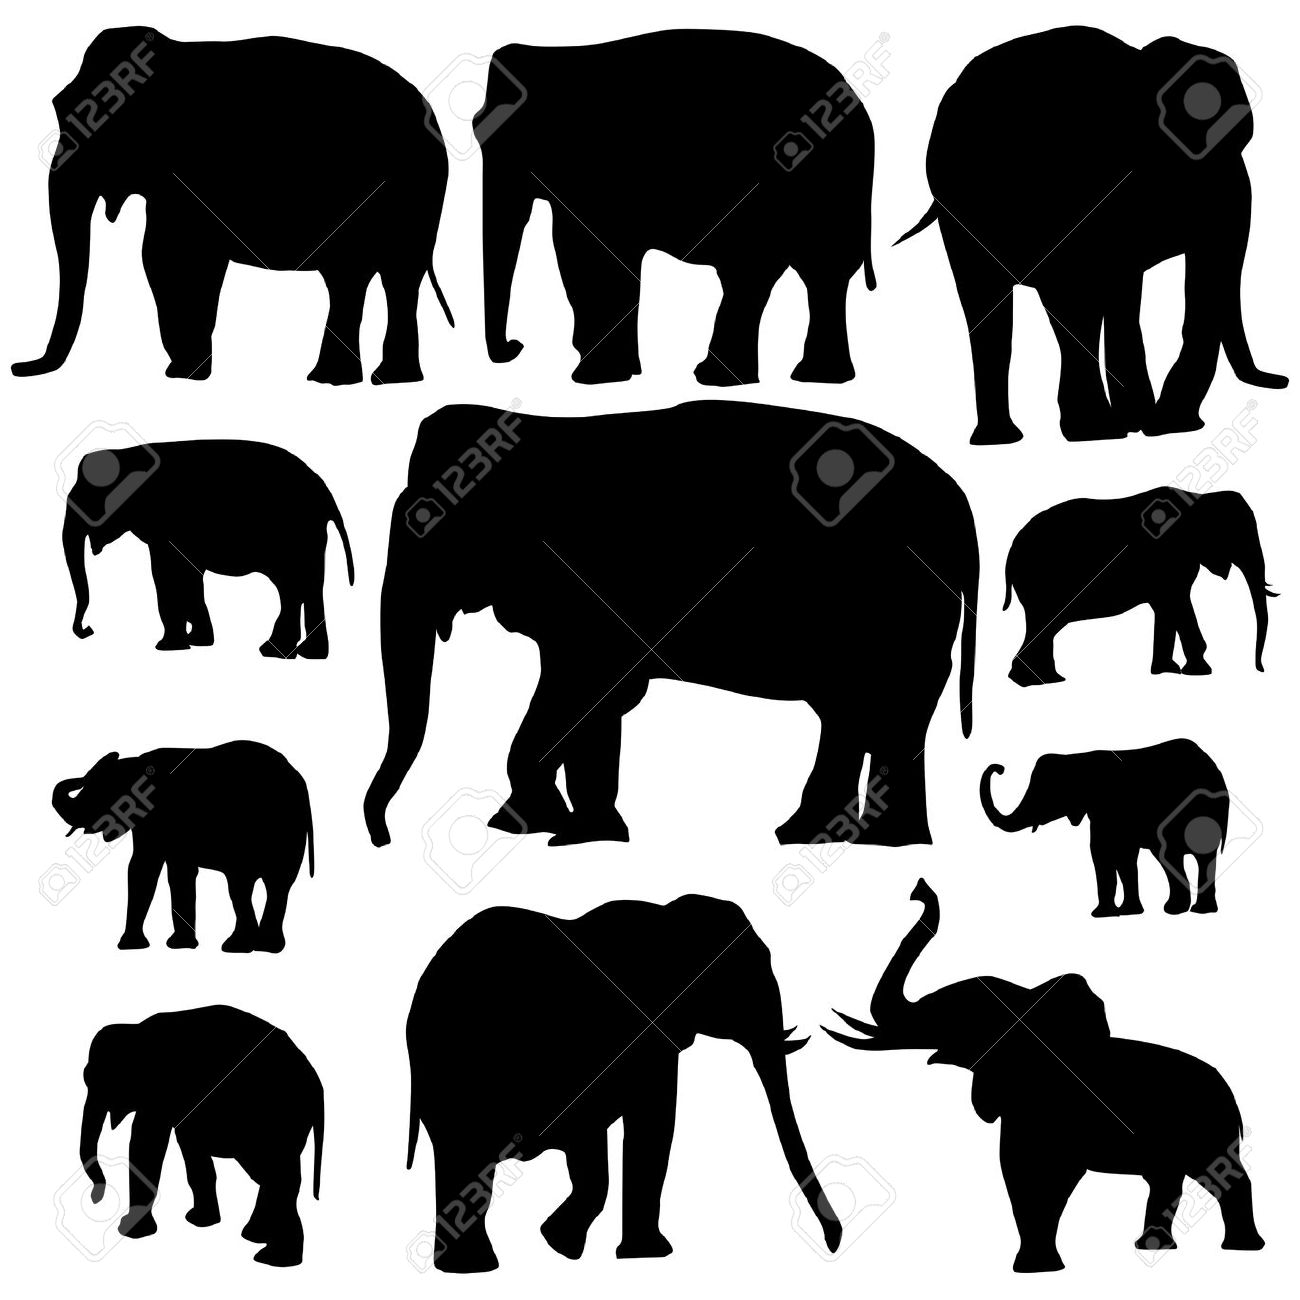 Asian clipart silhouette. White elephant clip art